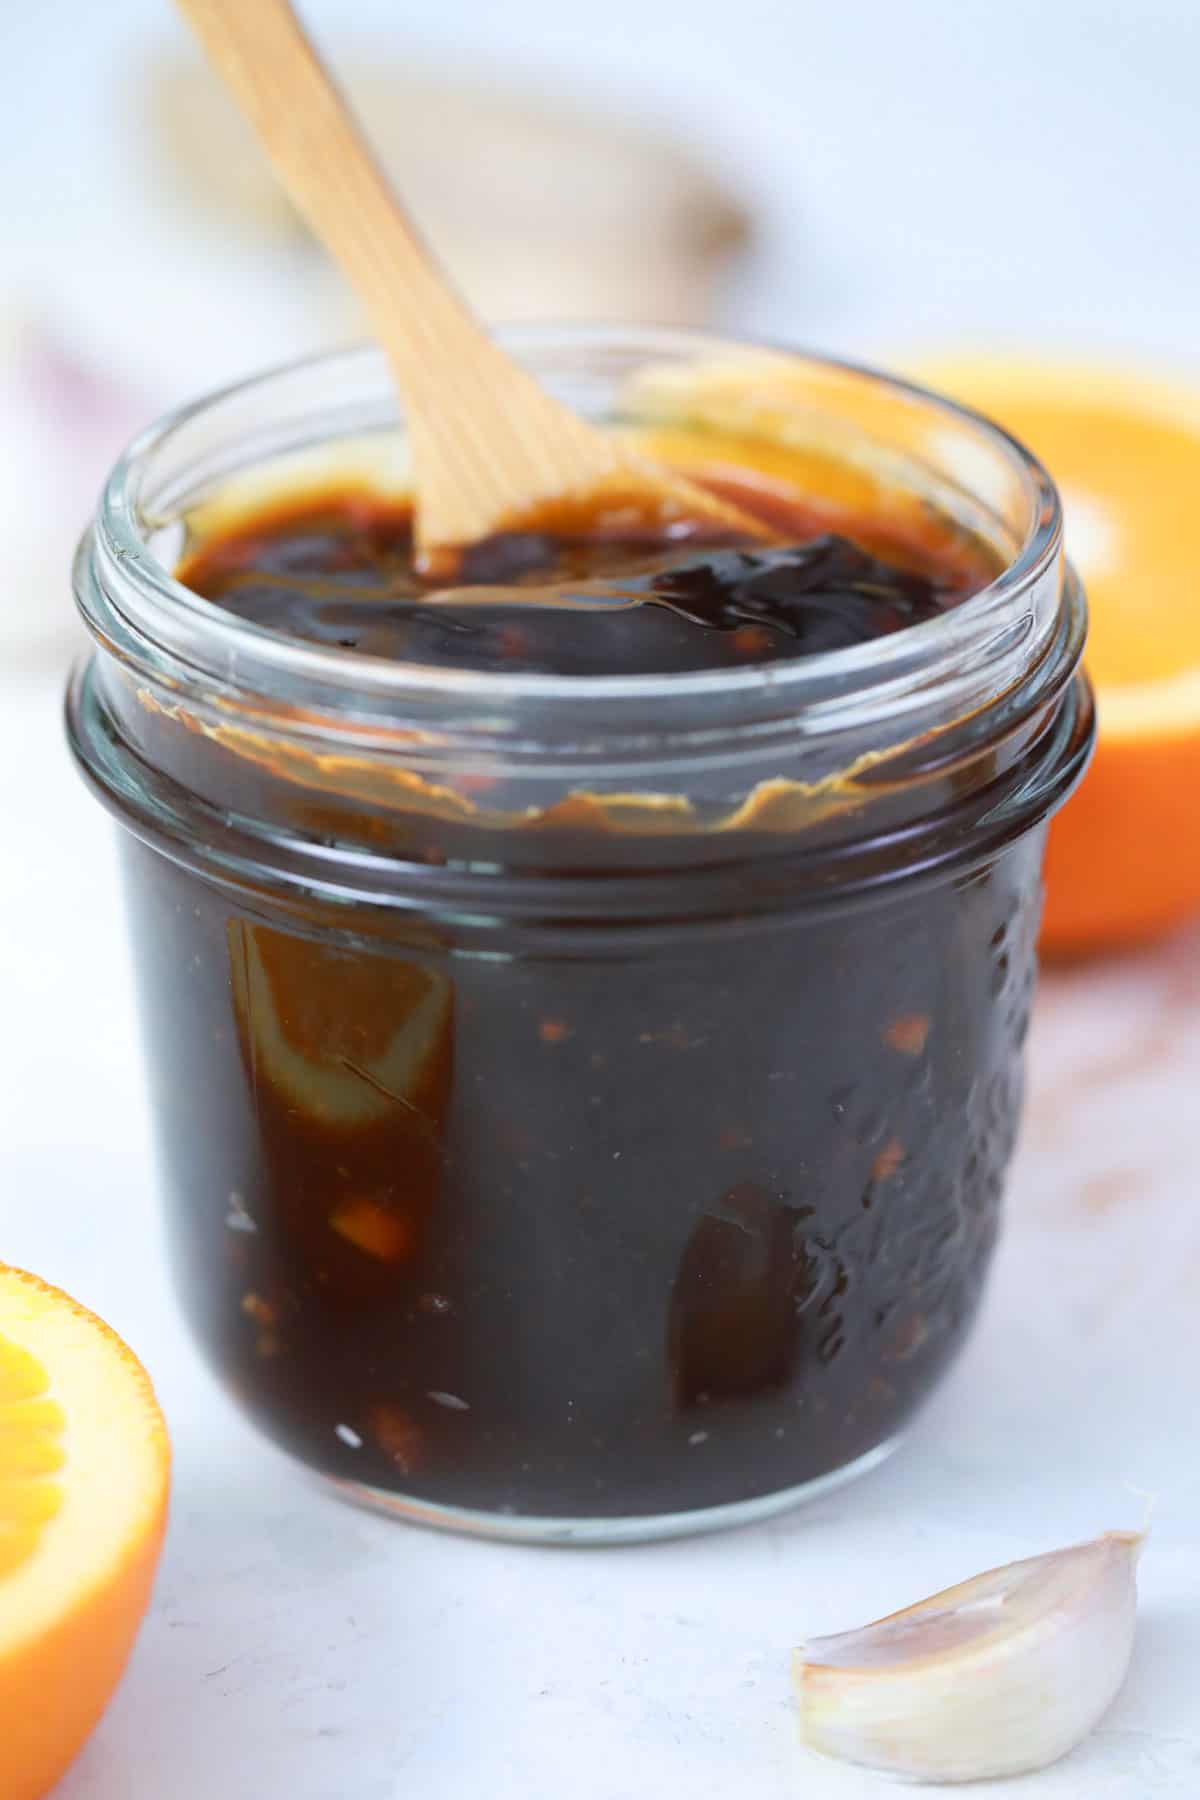 teriyaki sauce in a jar with a wooden spoon